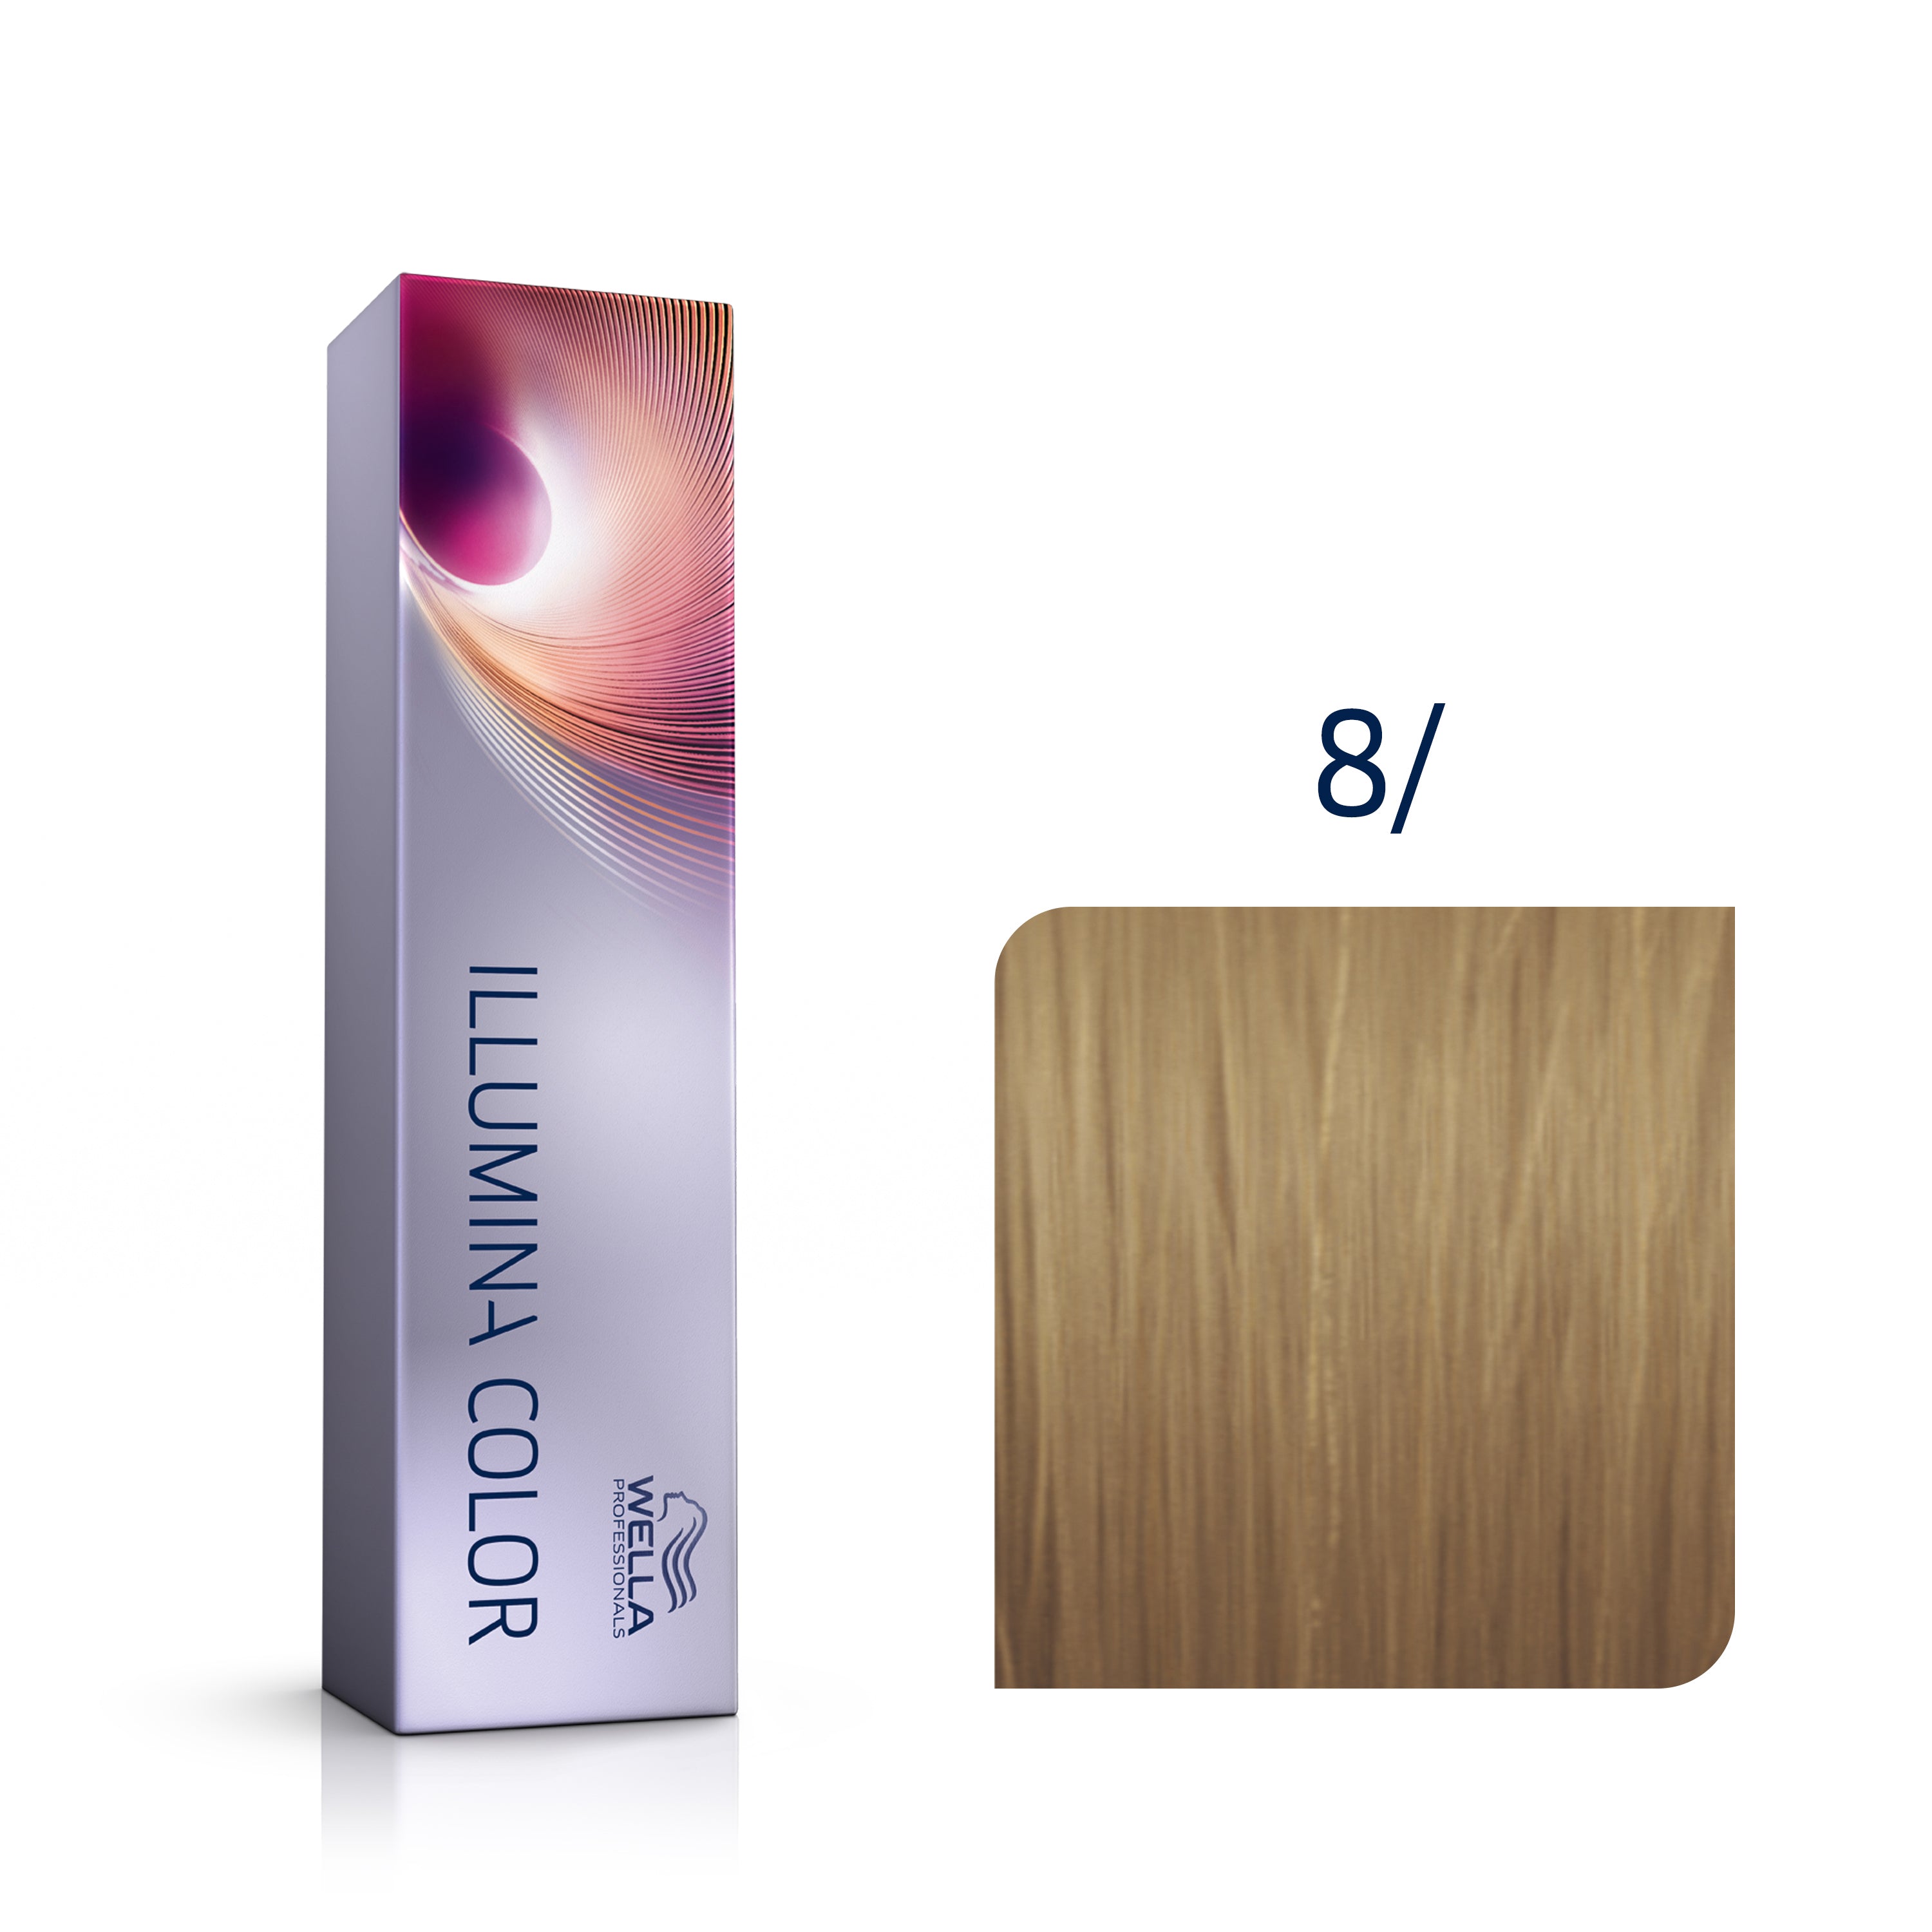 Wella Professional Illumina 8/ light blonde 60 ml